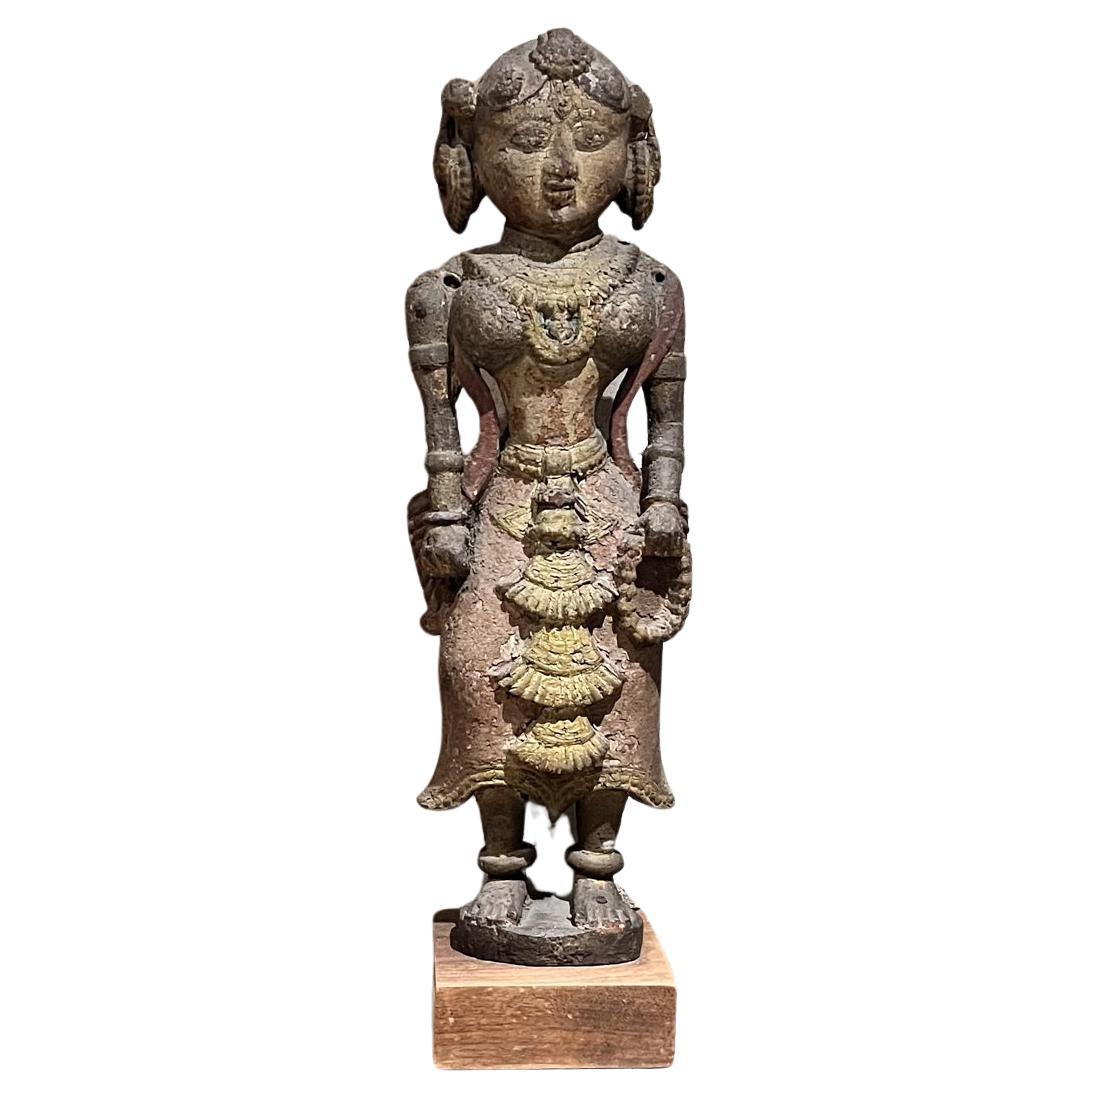 1900s Sculpture of Hindu Goddess Figure Intricate Wood Carving